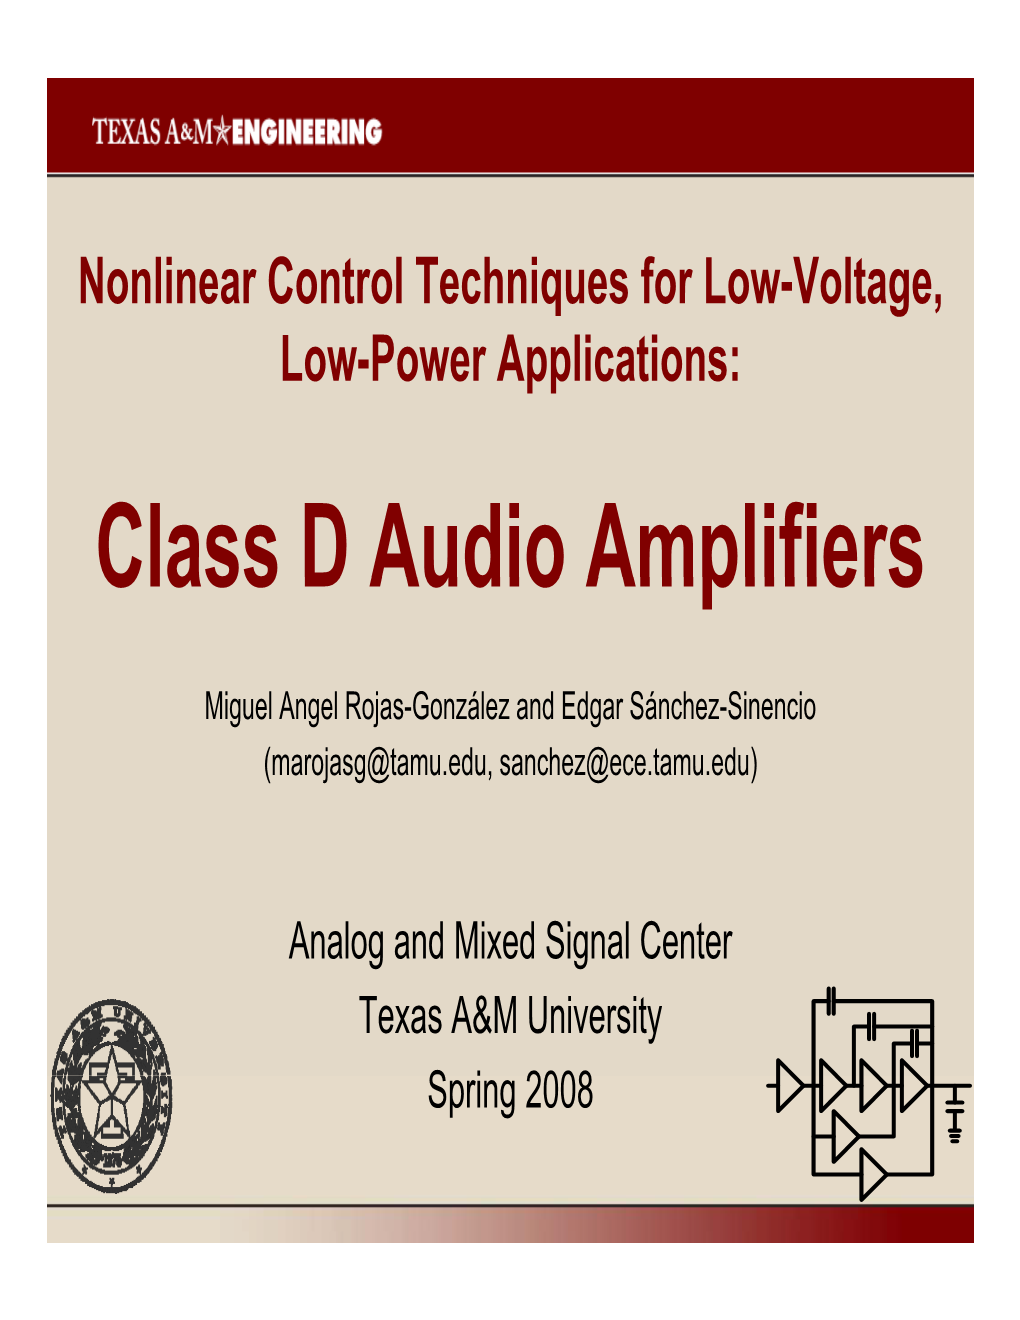 Class D Audio Amplifiers